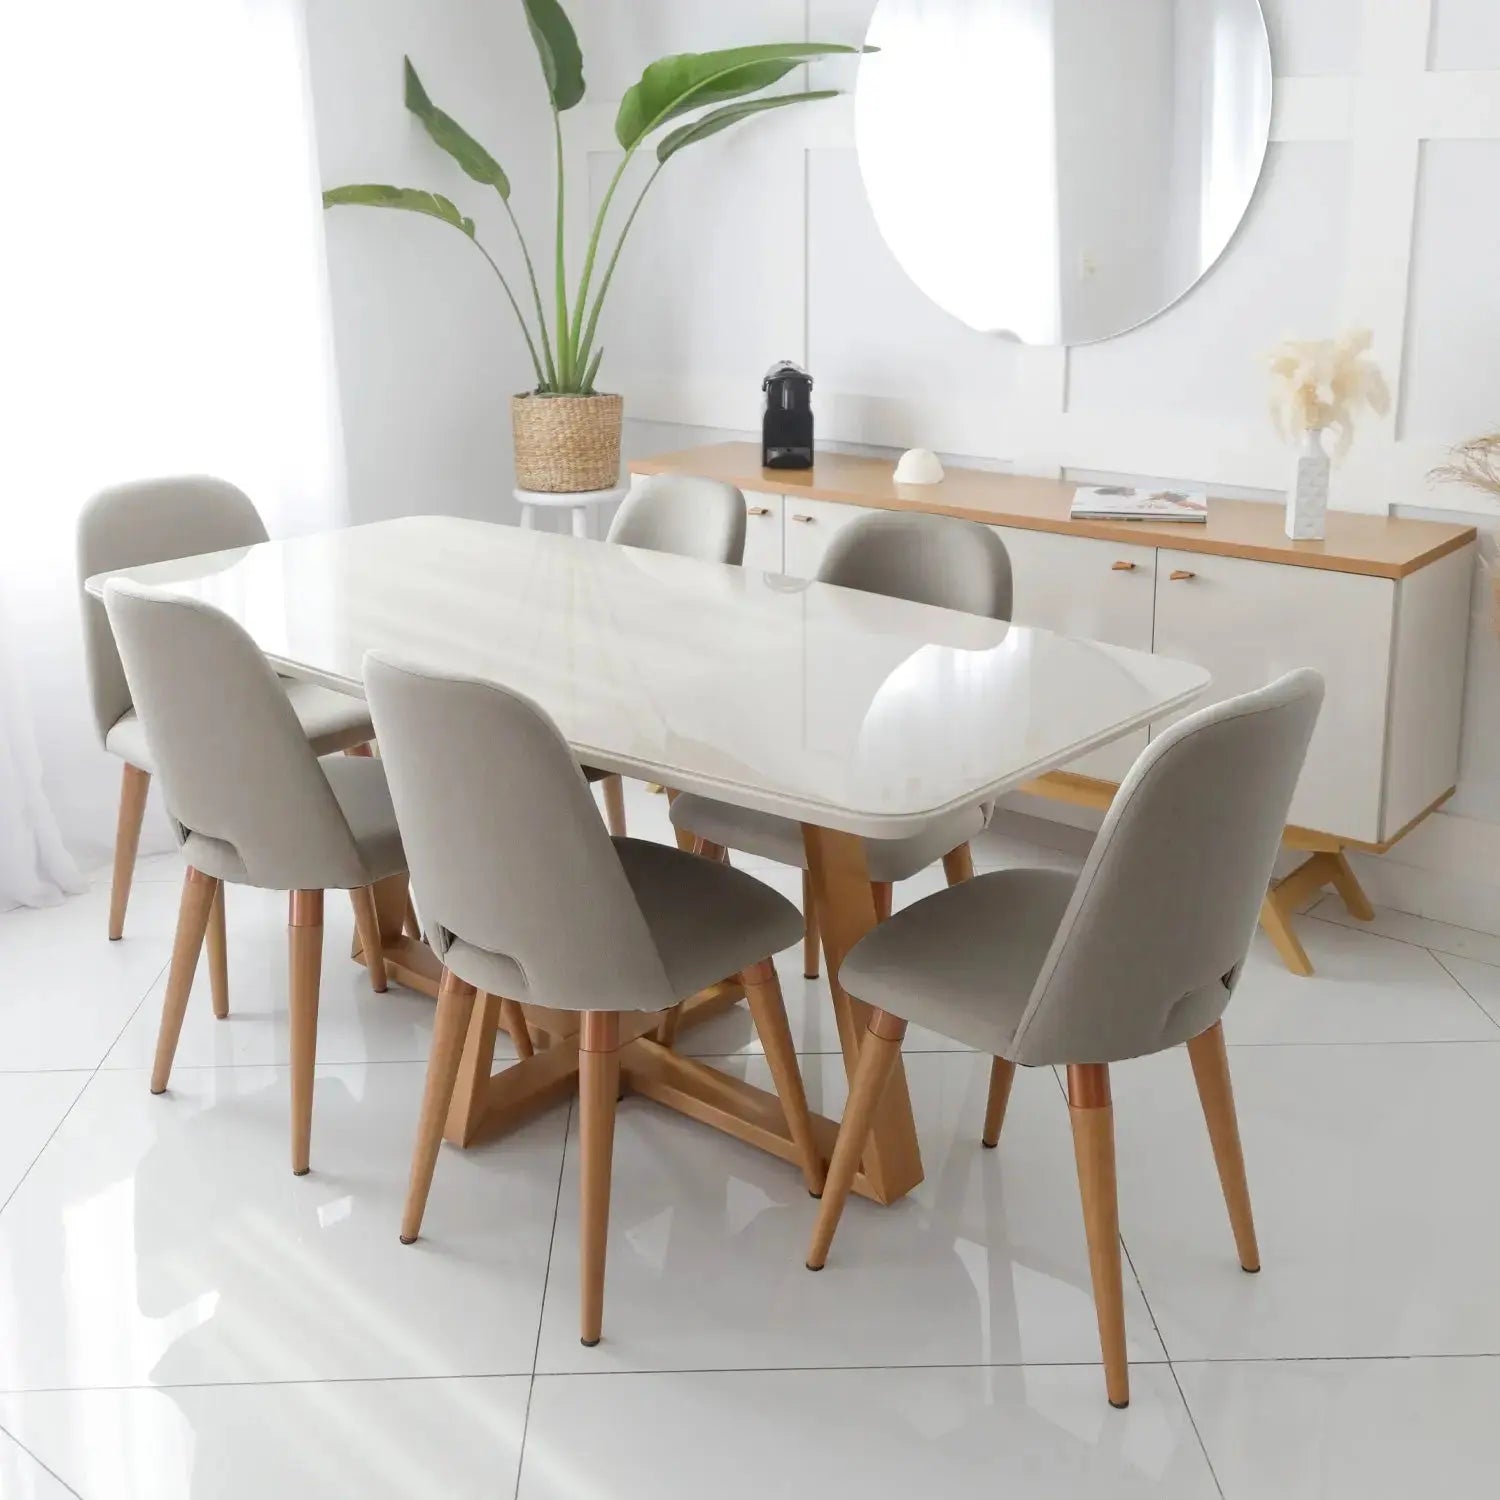 Escolha e combine mesas e cadeiras de jantar de forma funcional e